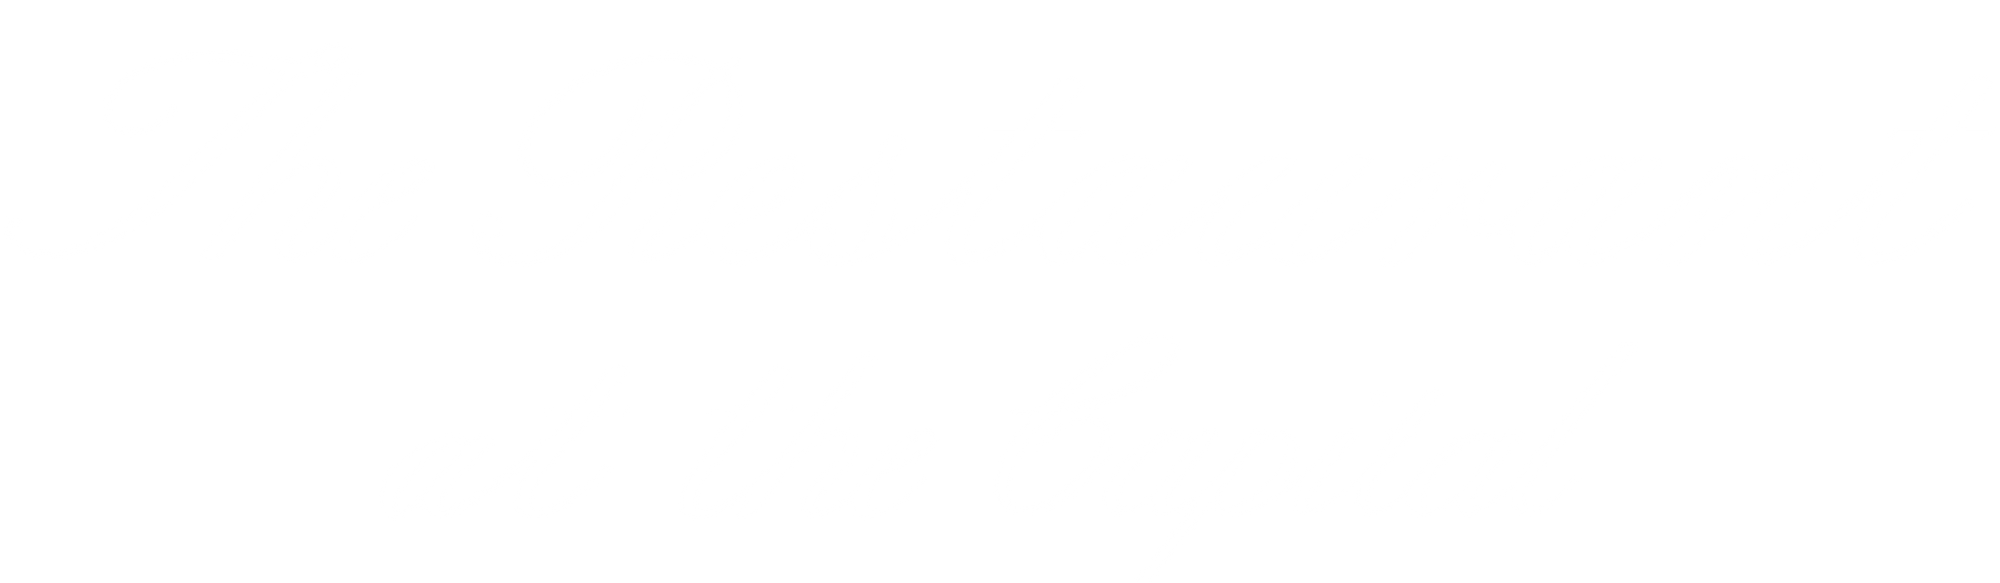 The Restaurant at the Capital Logo White